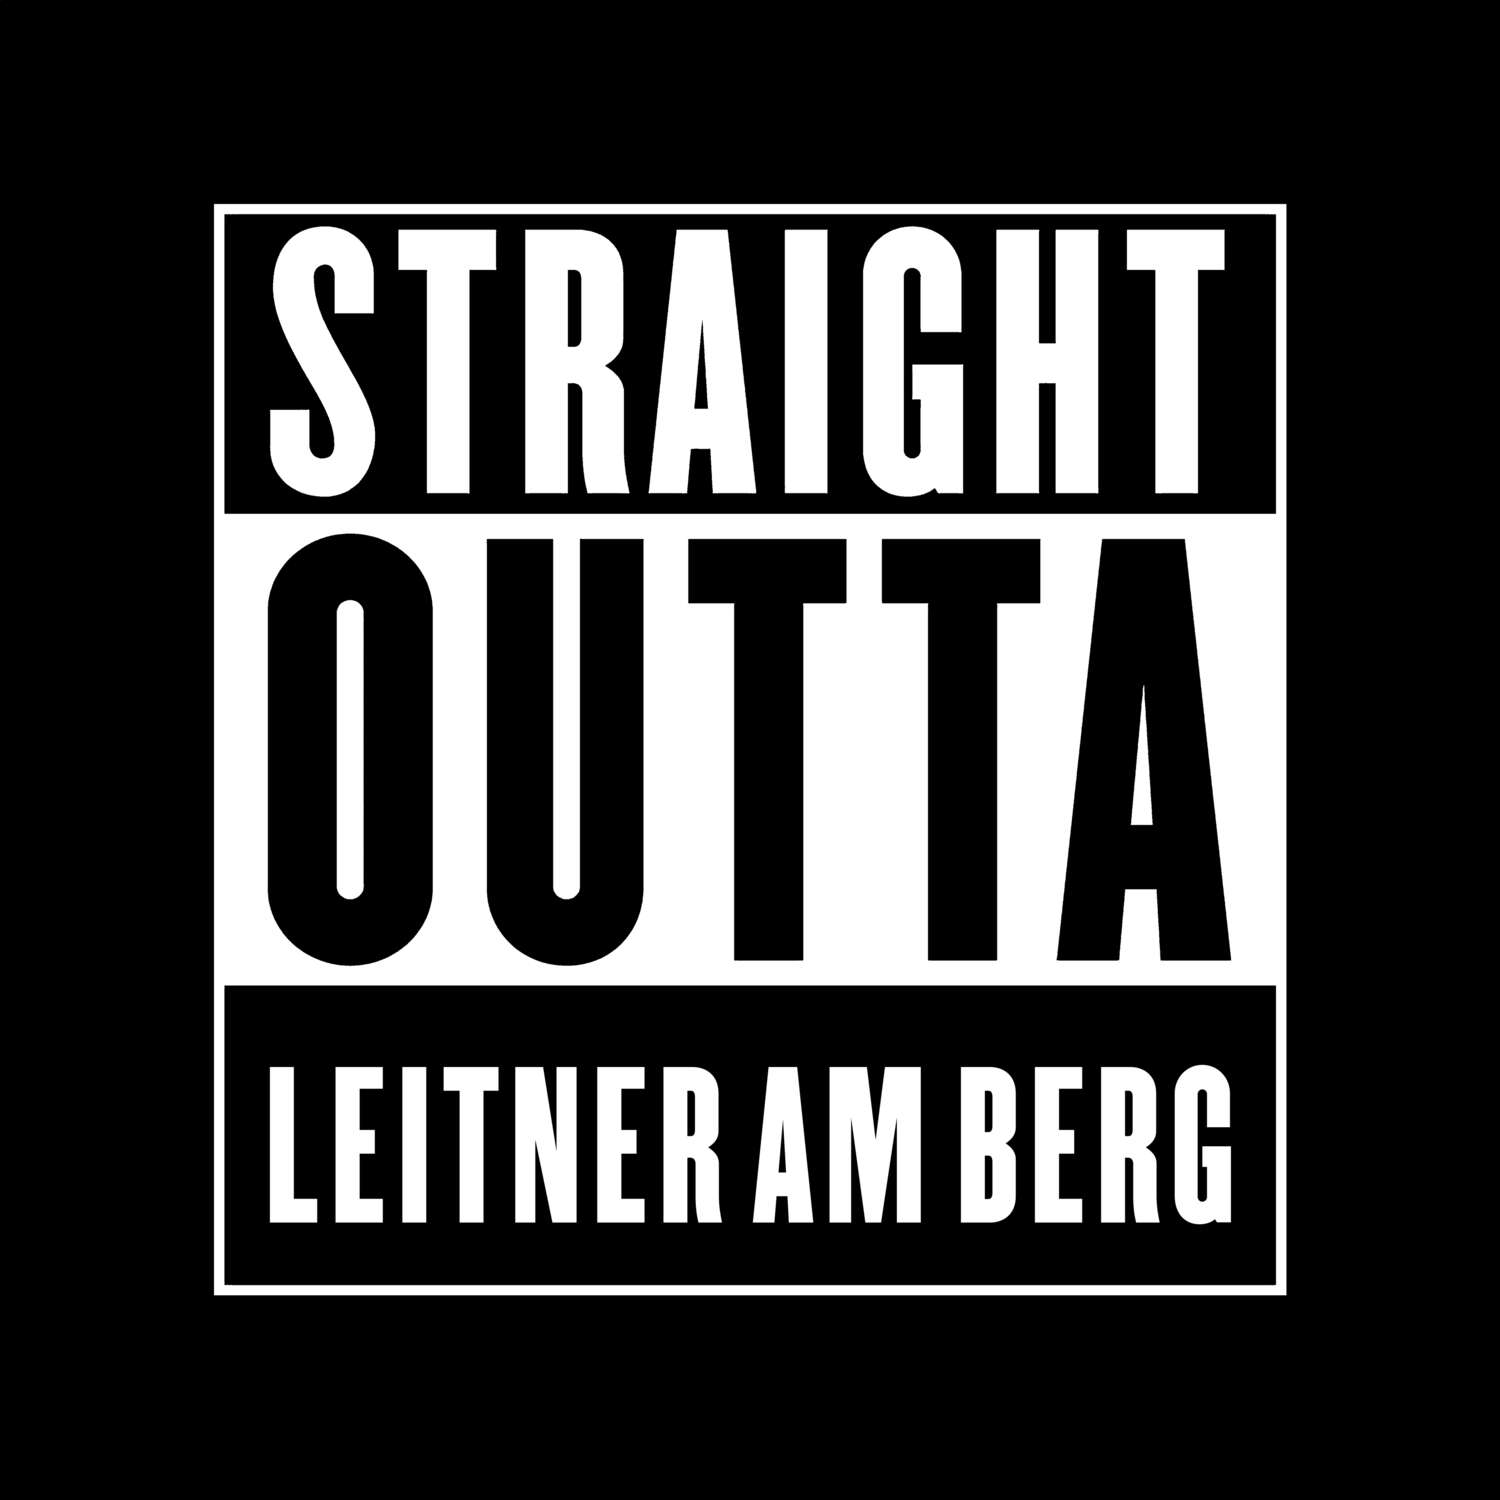 Leitner am Berg T-Shirt »Straight Outta«